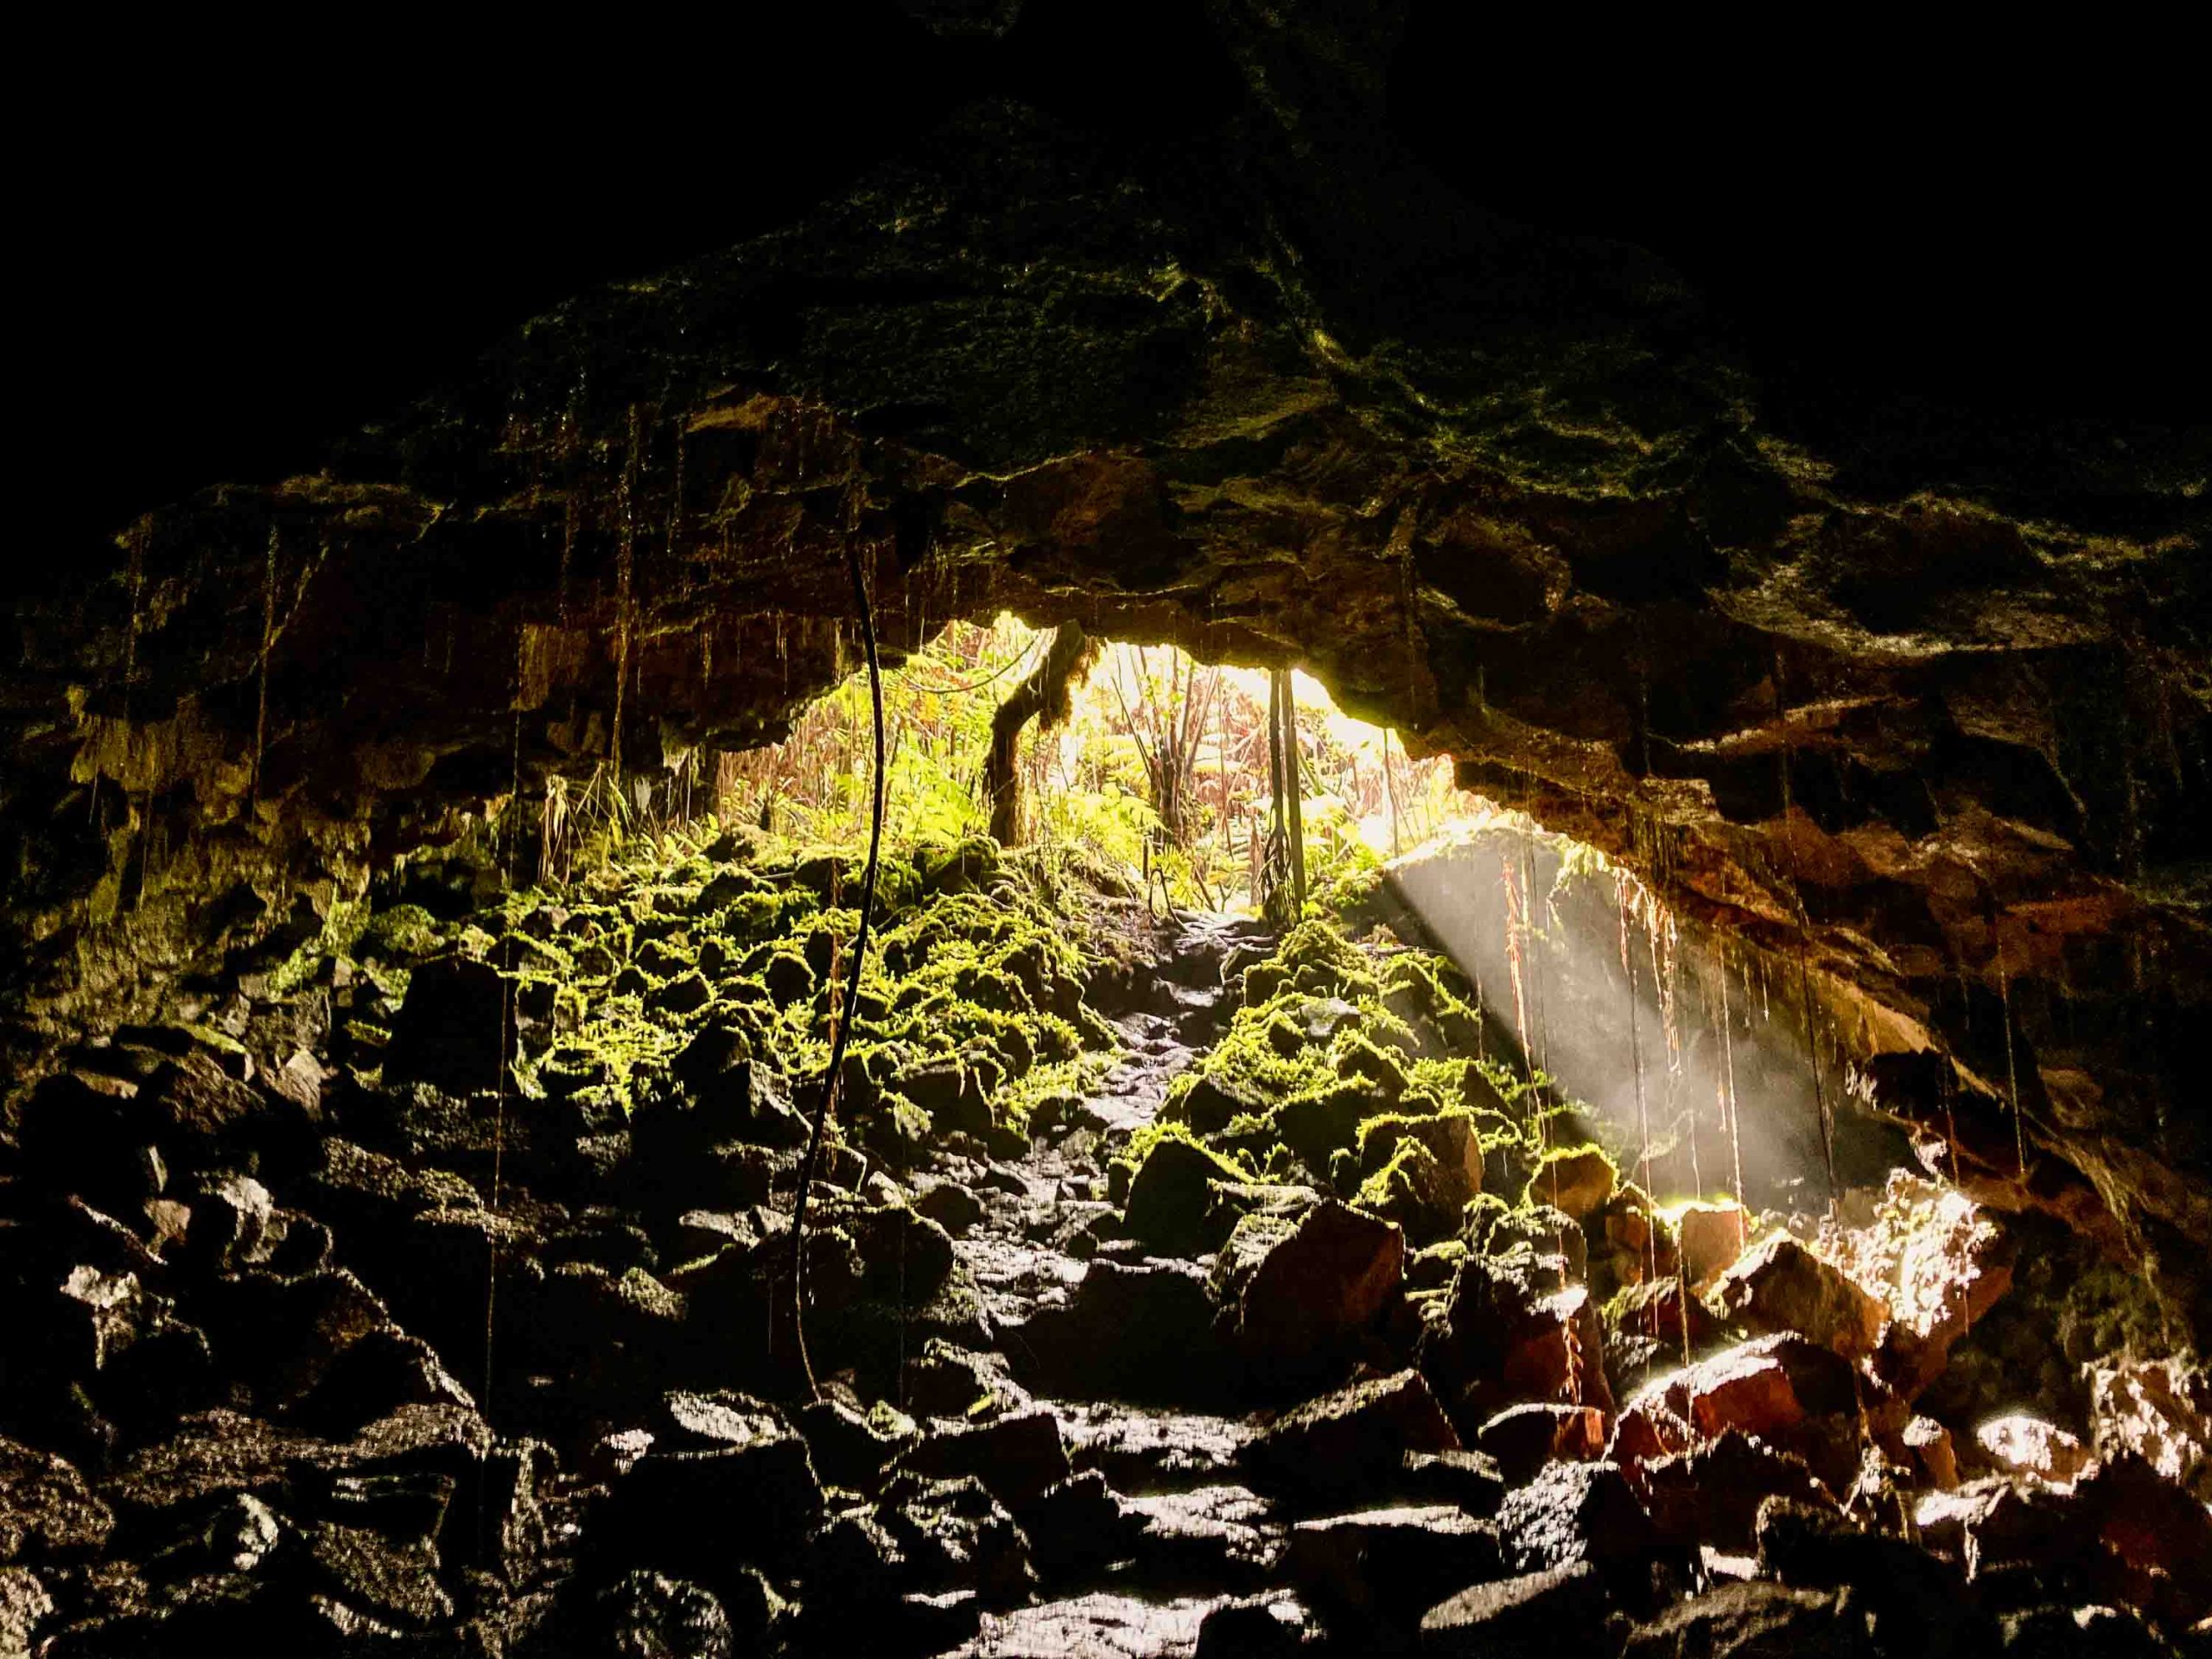 https://adventure.com/wp-content/uploads/2022/06/Kazumara-backyard-cave-Kazumura-Cave_PL-scaled.jpg